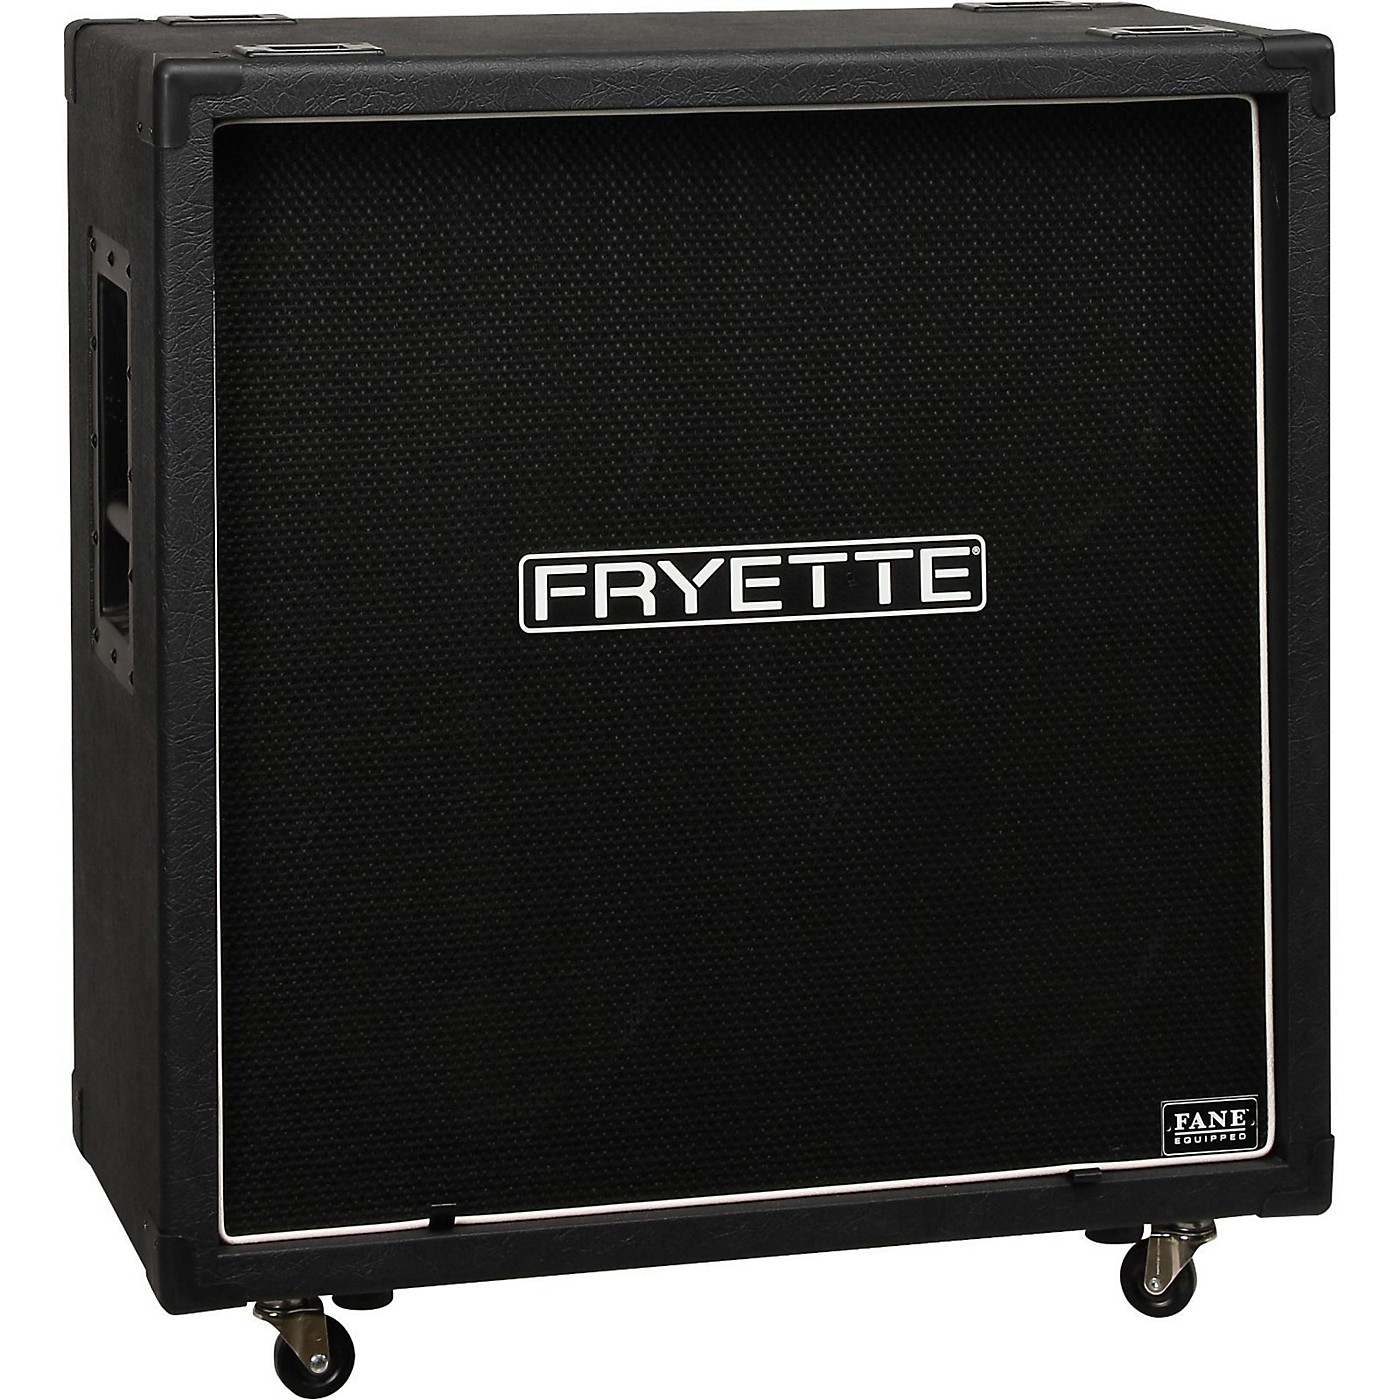 Fryette FatBottom 412 280W 4x12 Guitar Speaker Cabinet - Fane thumbnail